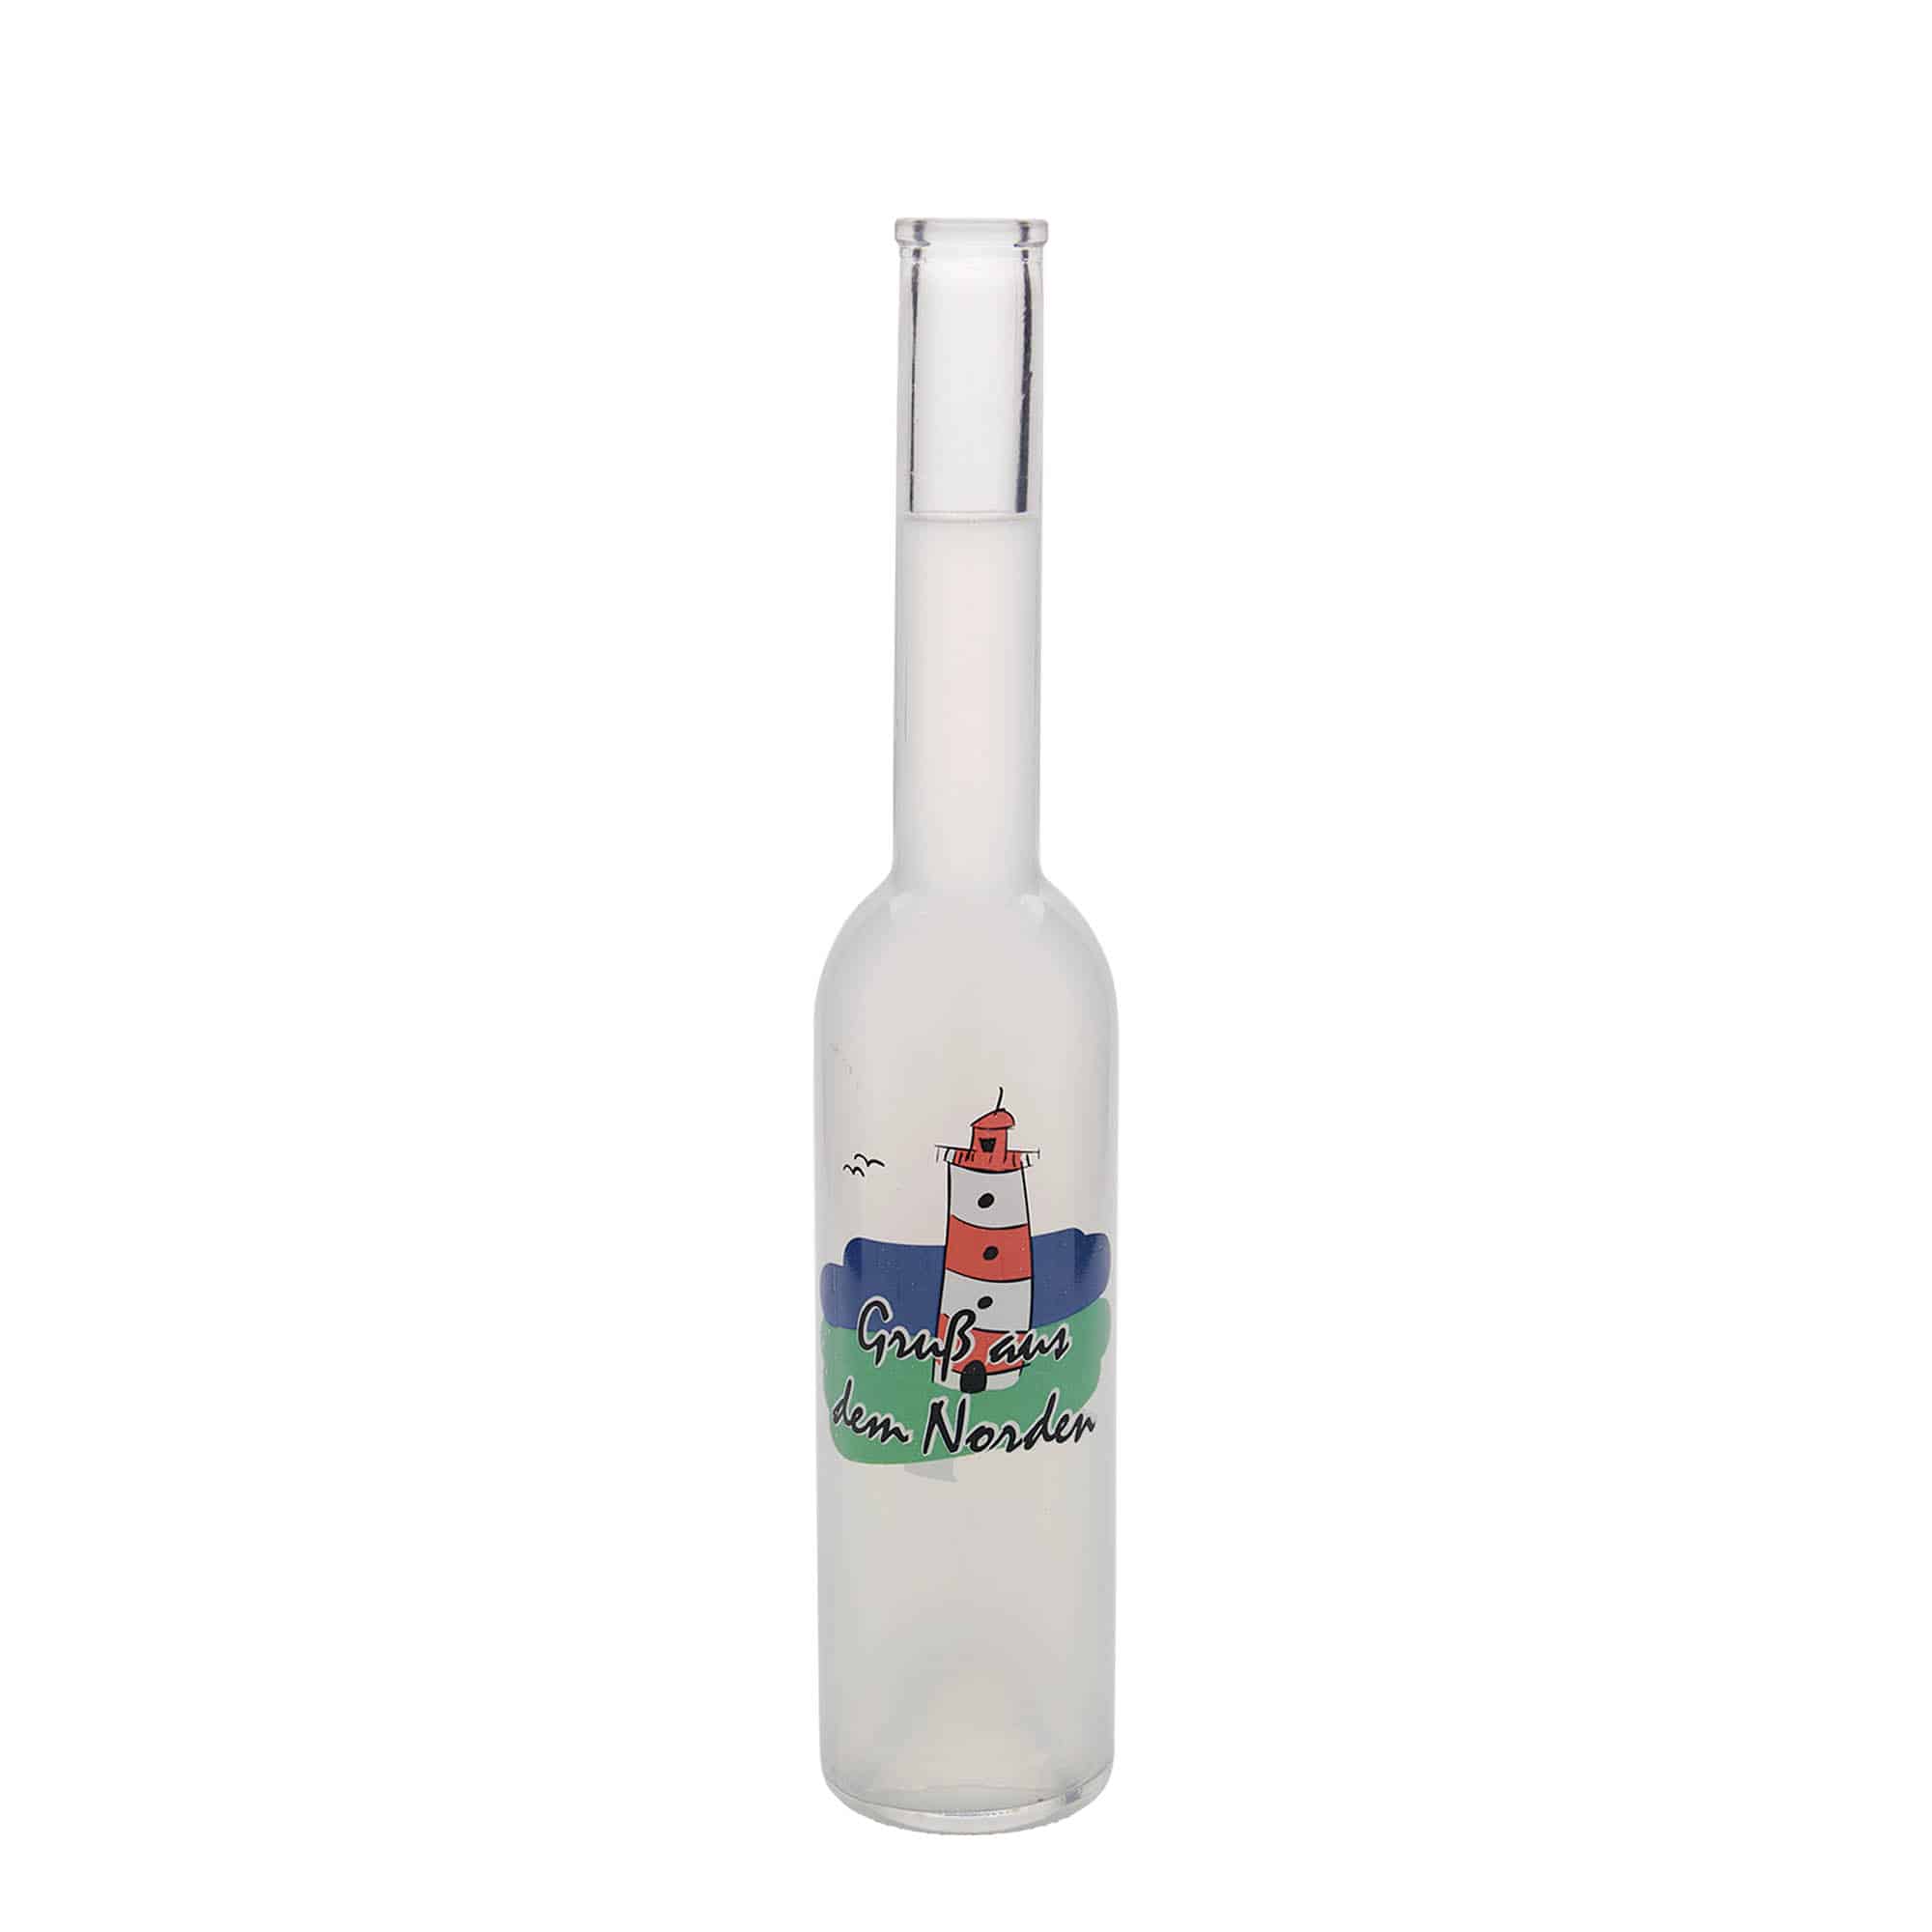 350 ml glass bottle 'Opera', print: north, closure: cork